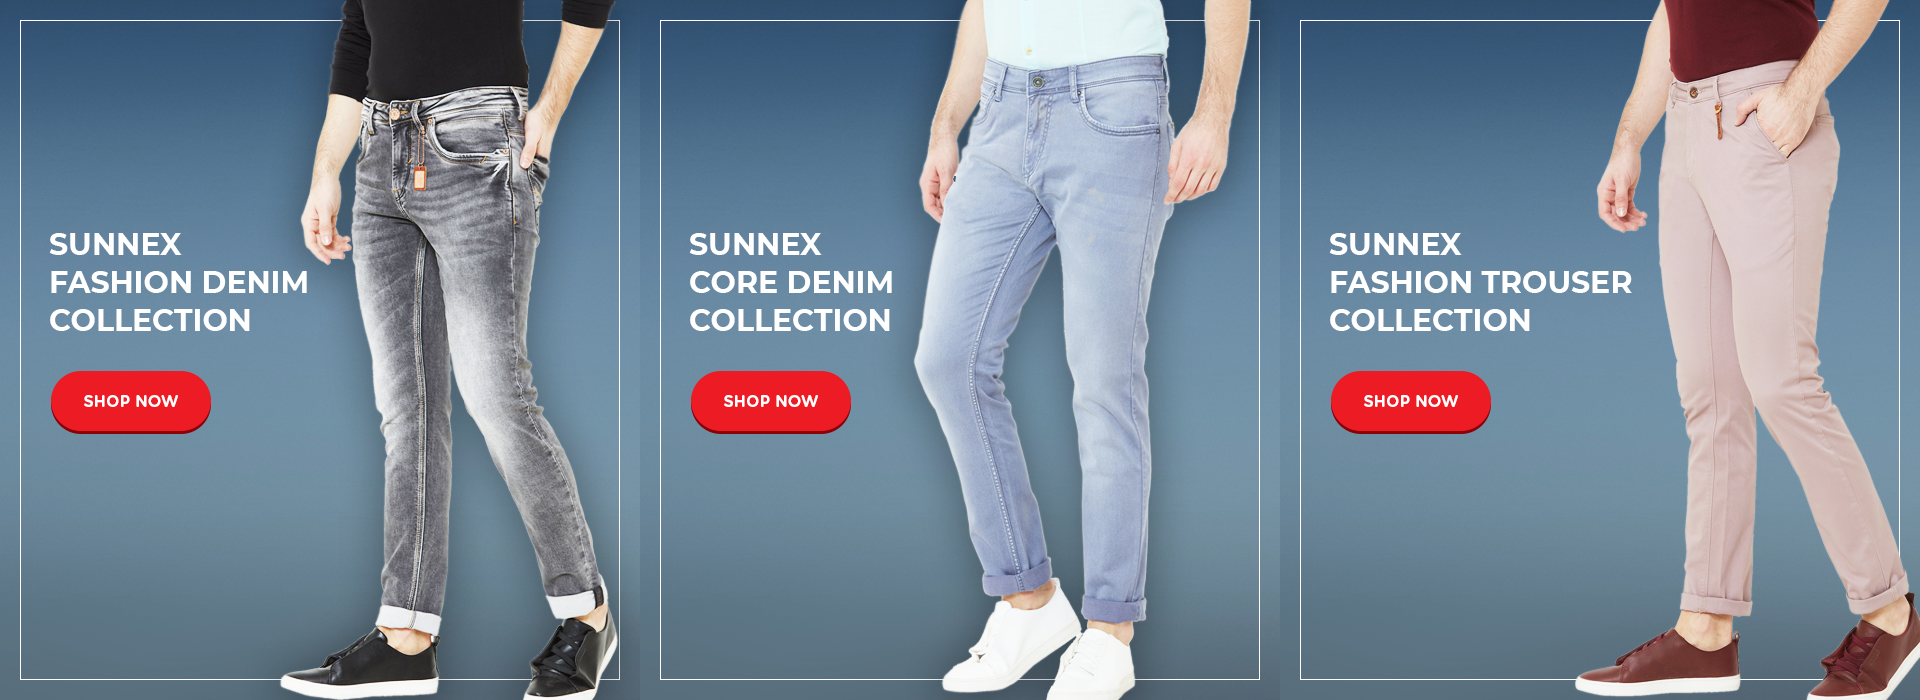 sunnex jeans company